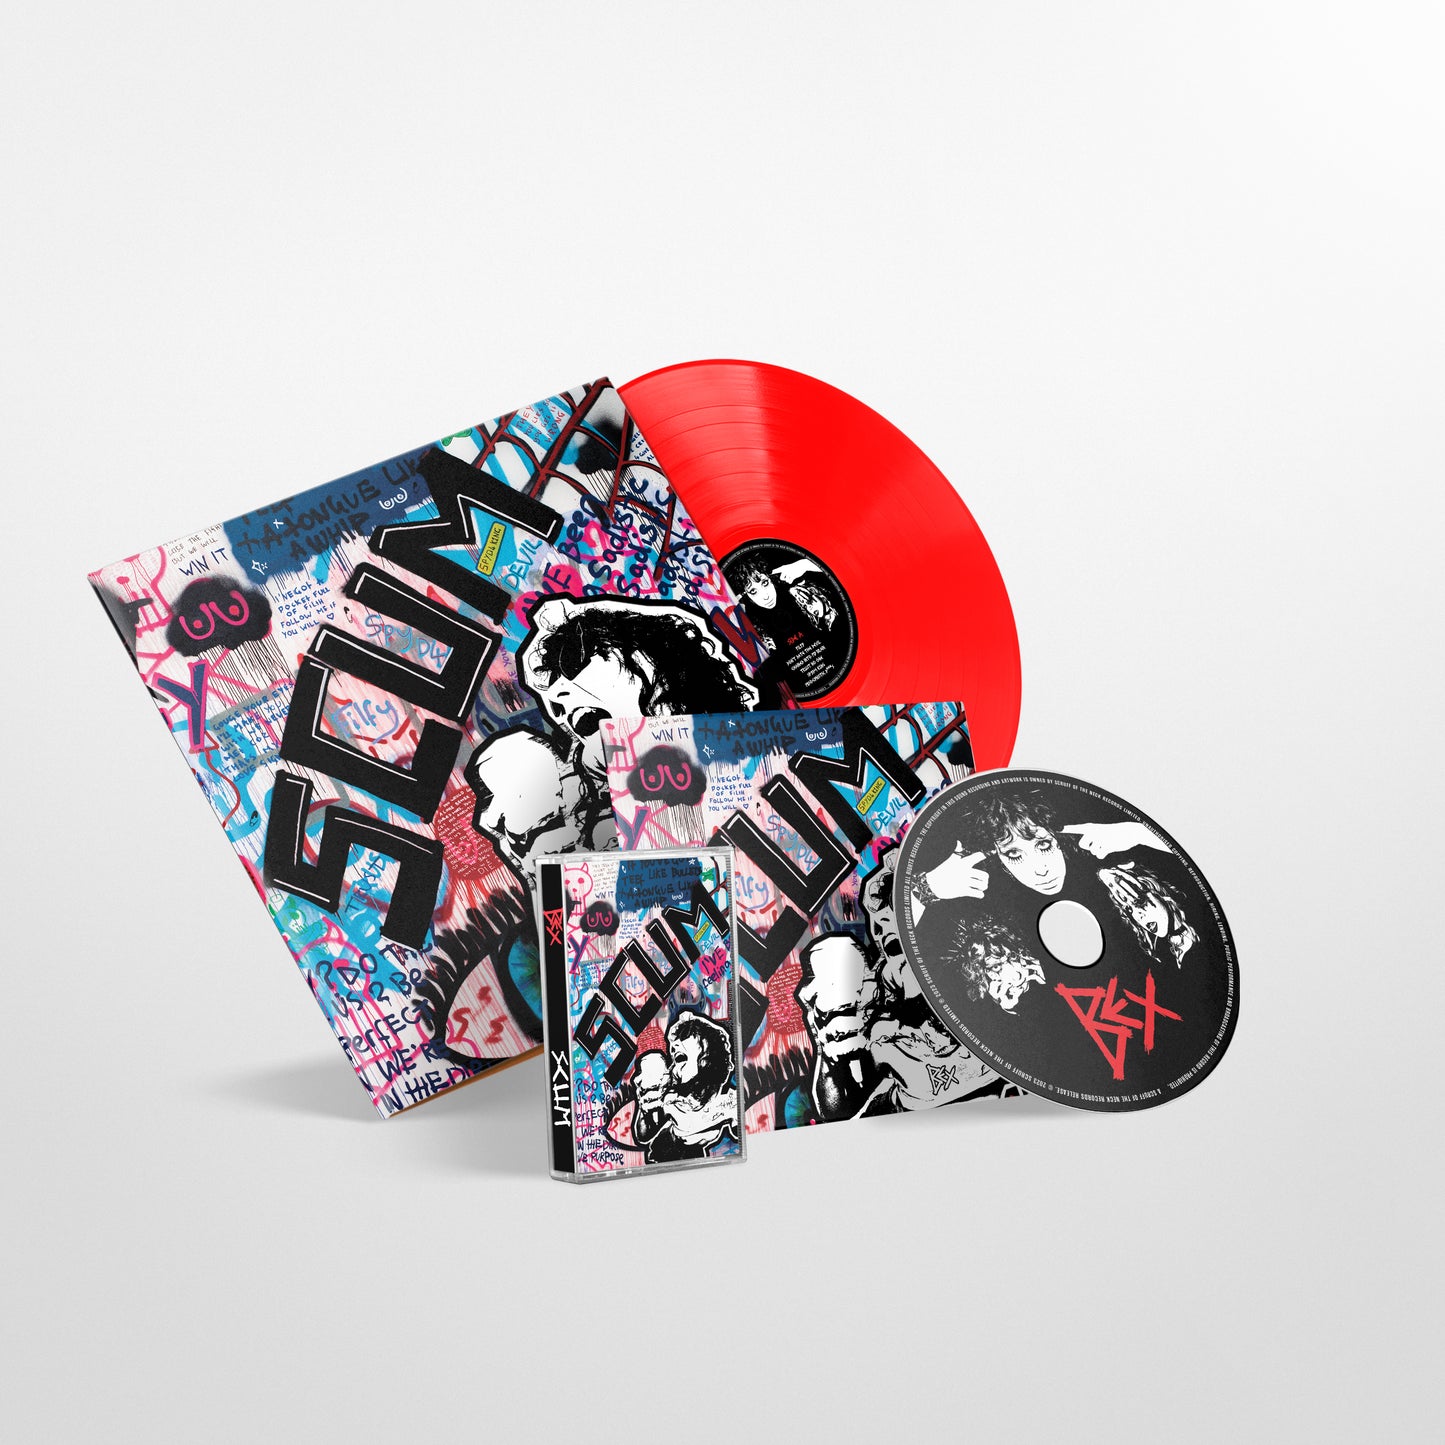 BEX - 'SCUM' EP Deluxe Edition- Bundle - Red 12" Vinyl Disc + CD + Cassette